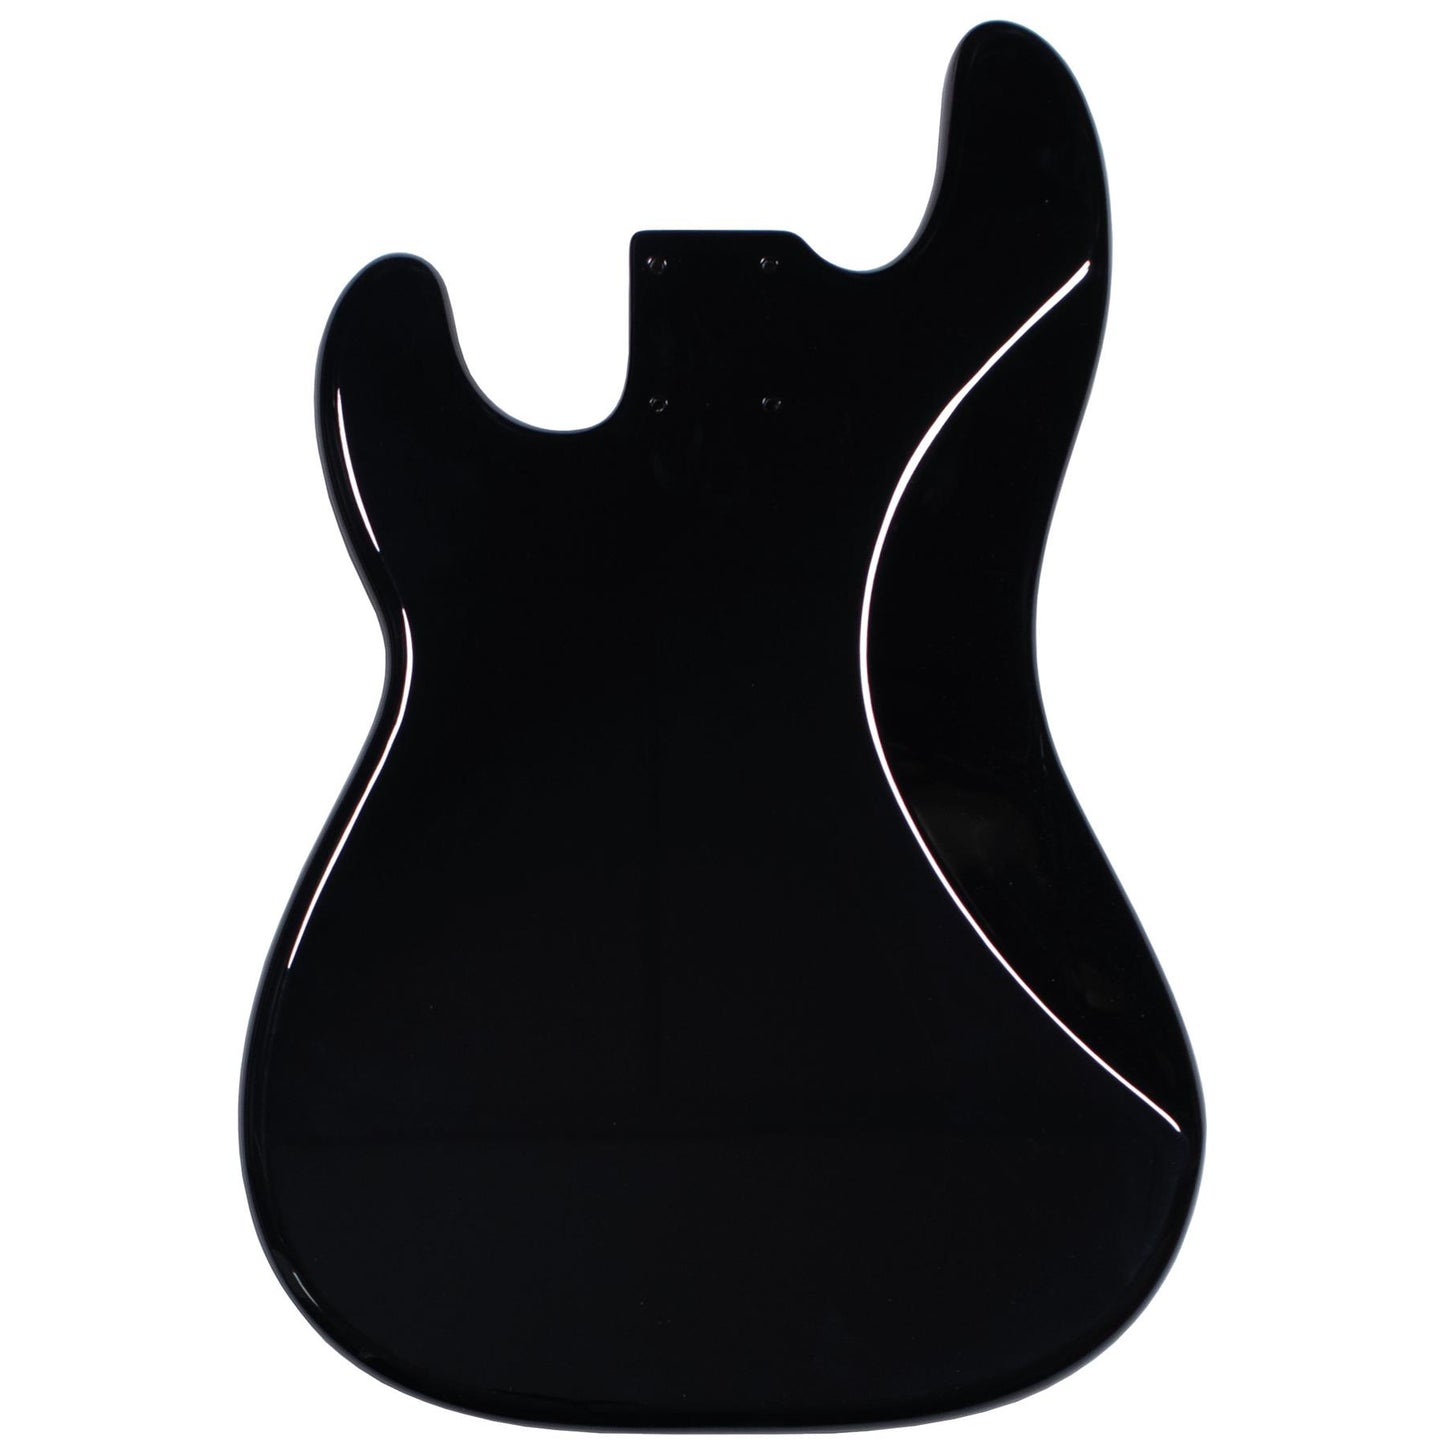 Precision Bass Compatible Guitar Body - Black Gloss